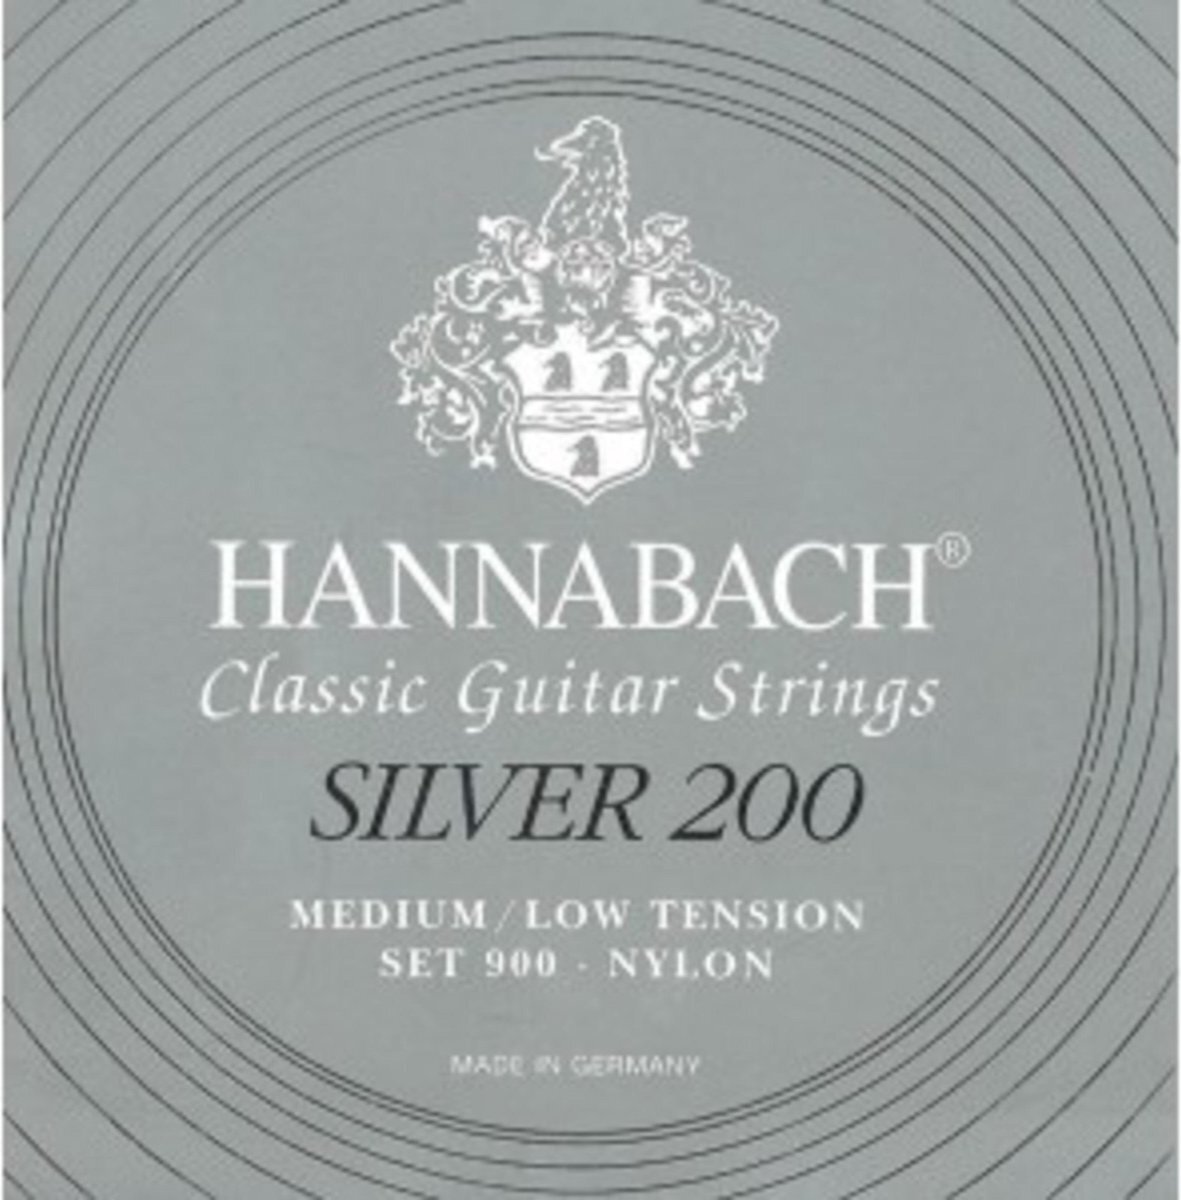 Hannabach K-Git.snaren set 900 MLT Nylon zilver 200